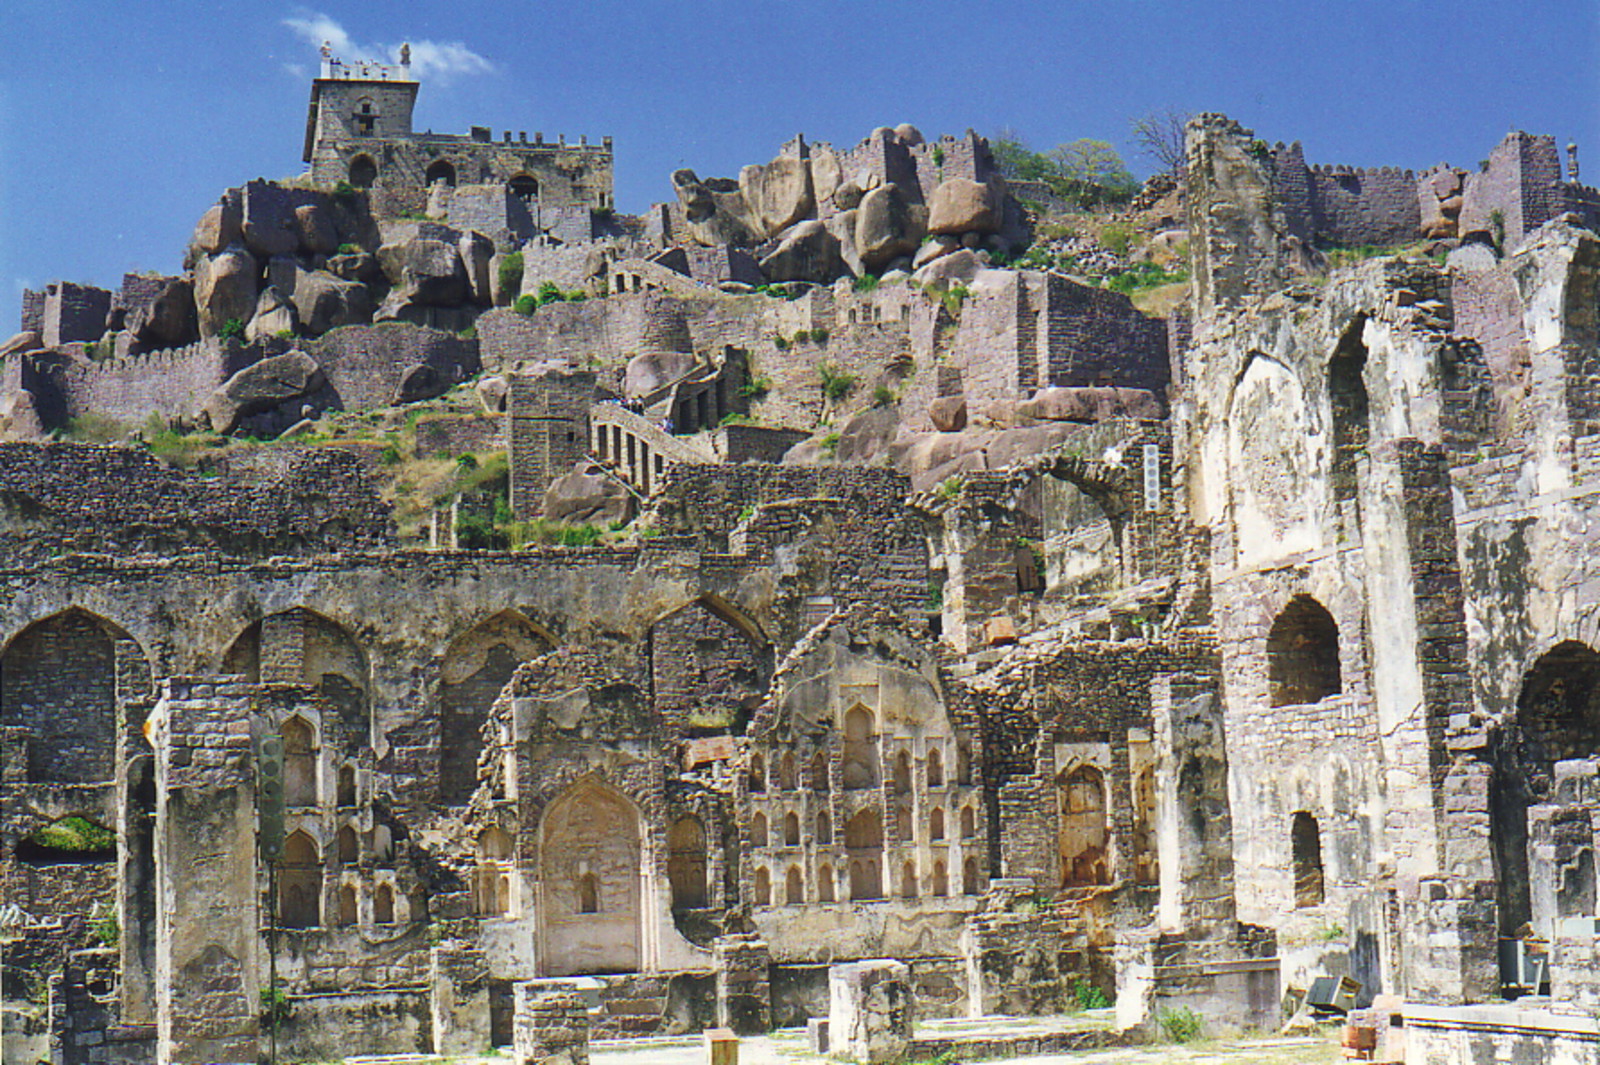 The ancient ruins of Golconda Fort